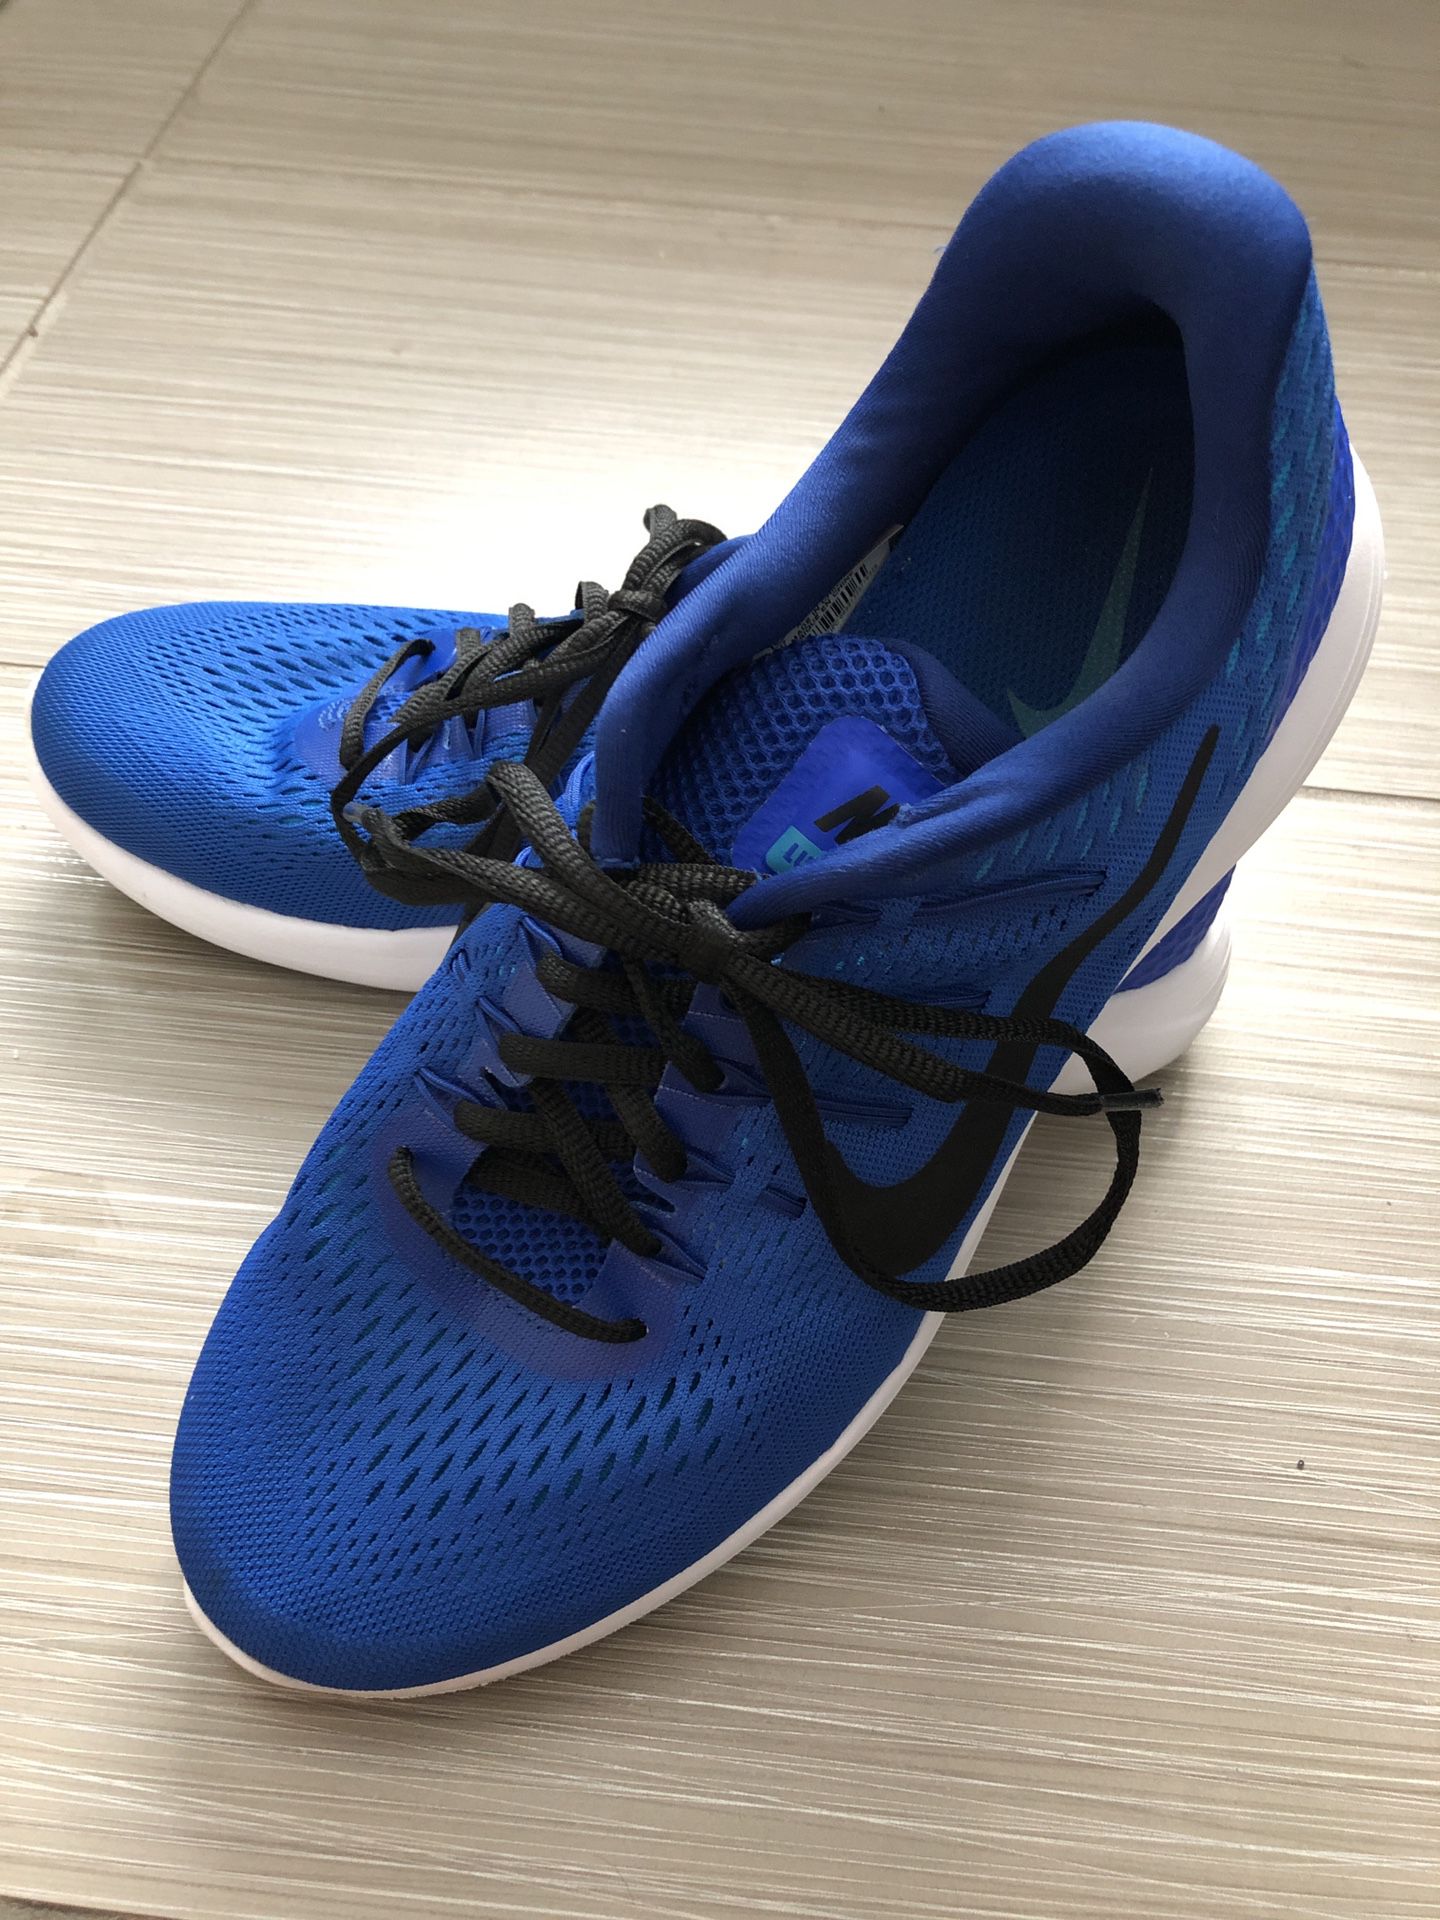 Like New! Nike Mens Lunarglide Running Shoe, Size 10